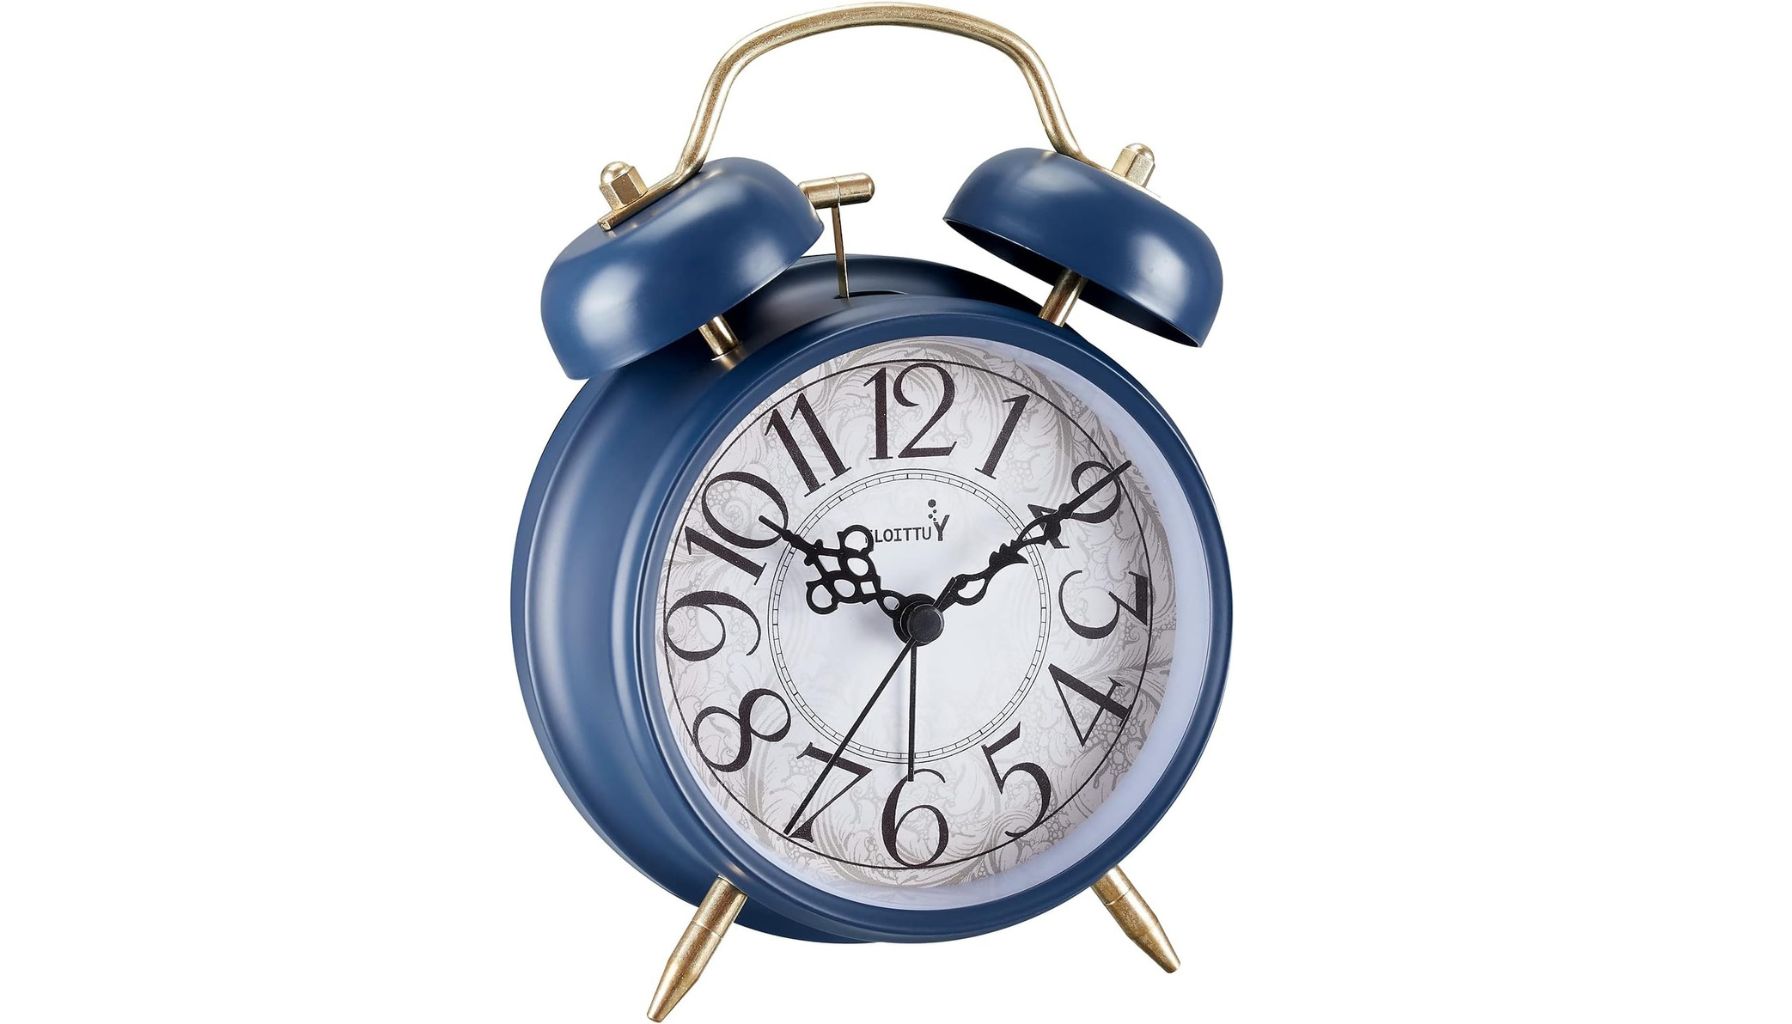 FLOITTUY Retro Twin Bell Alarm Clock Review